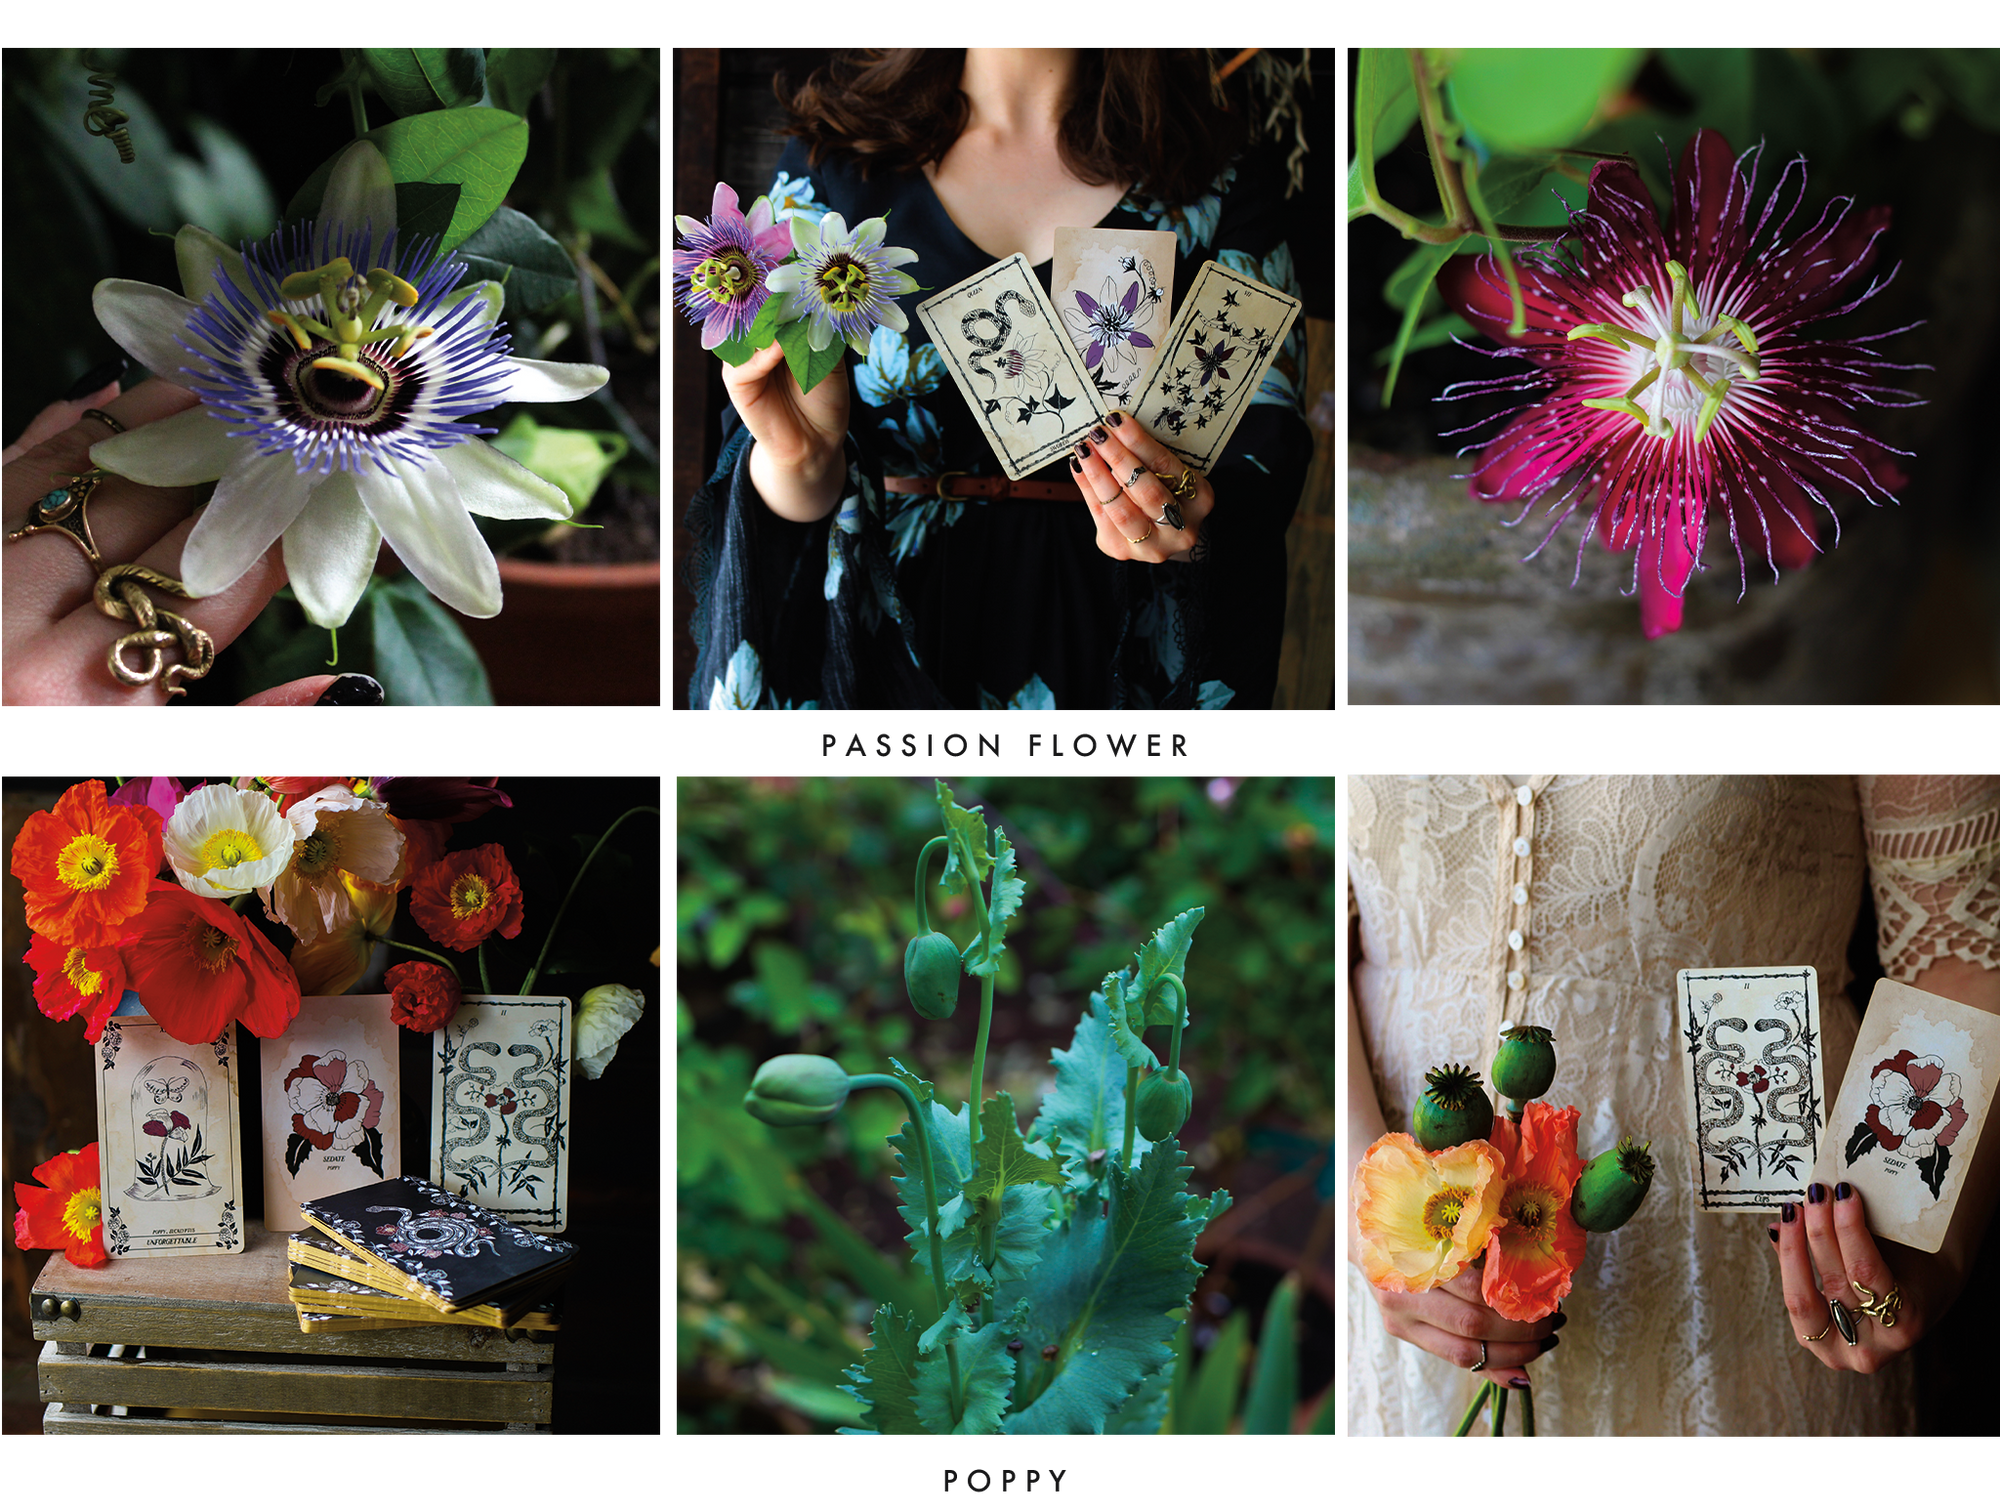 Botanical Tarot Card decks with their counterpart flowers from the garden.